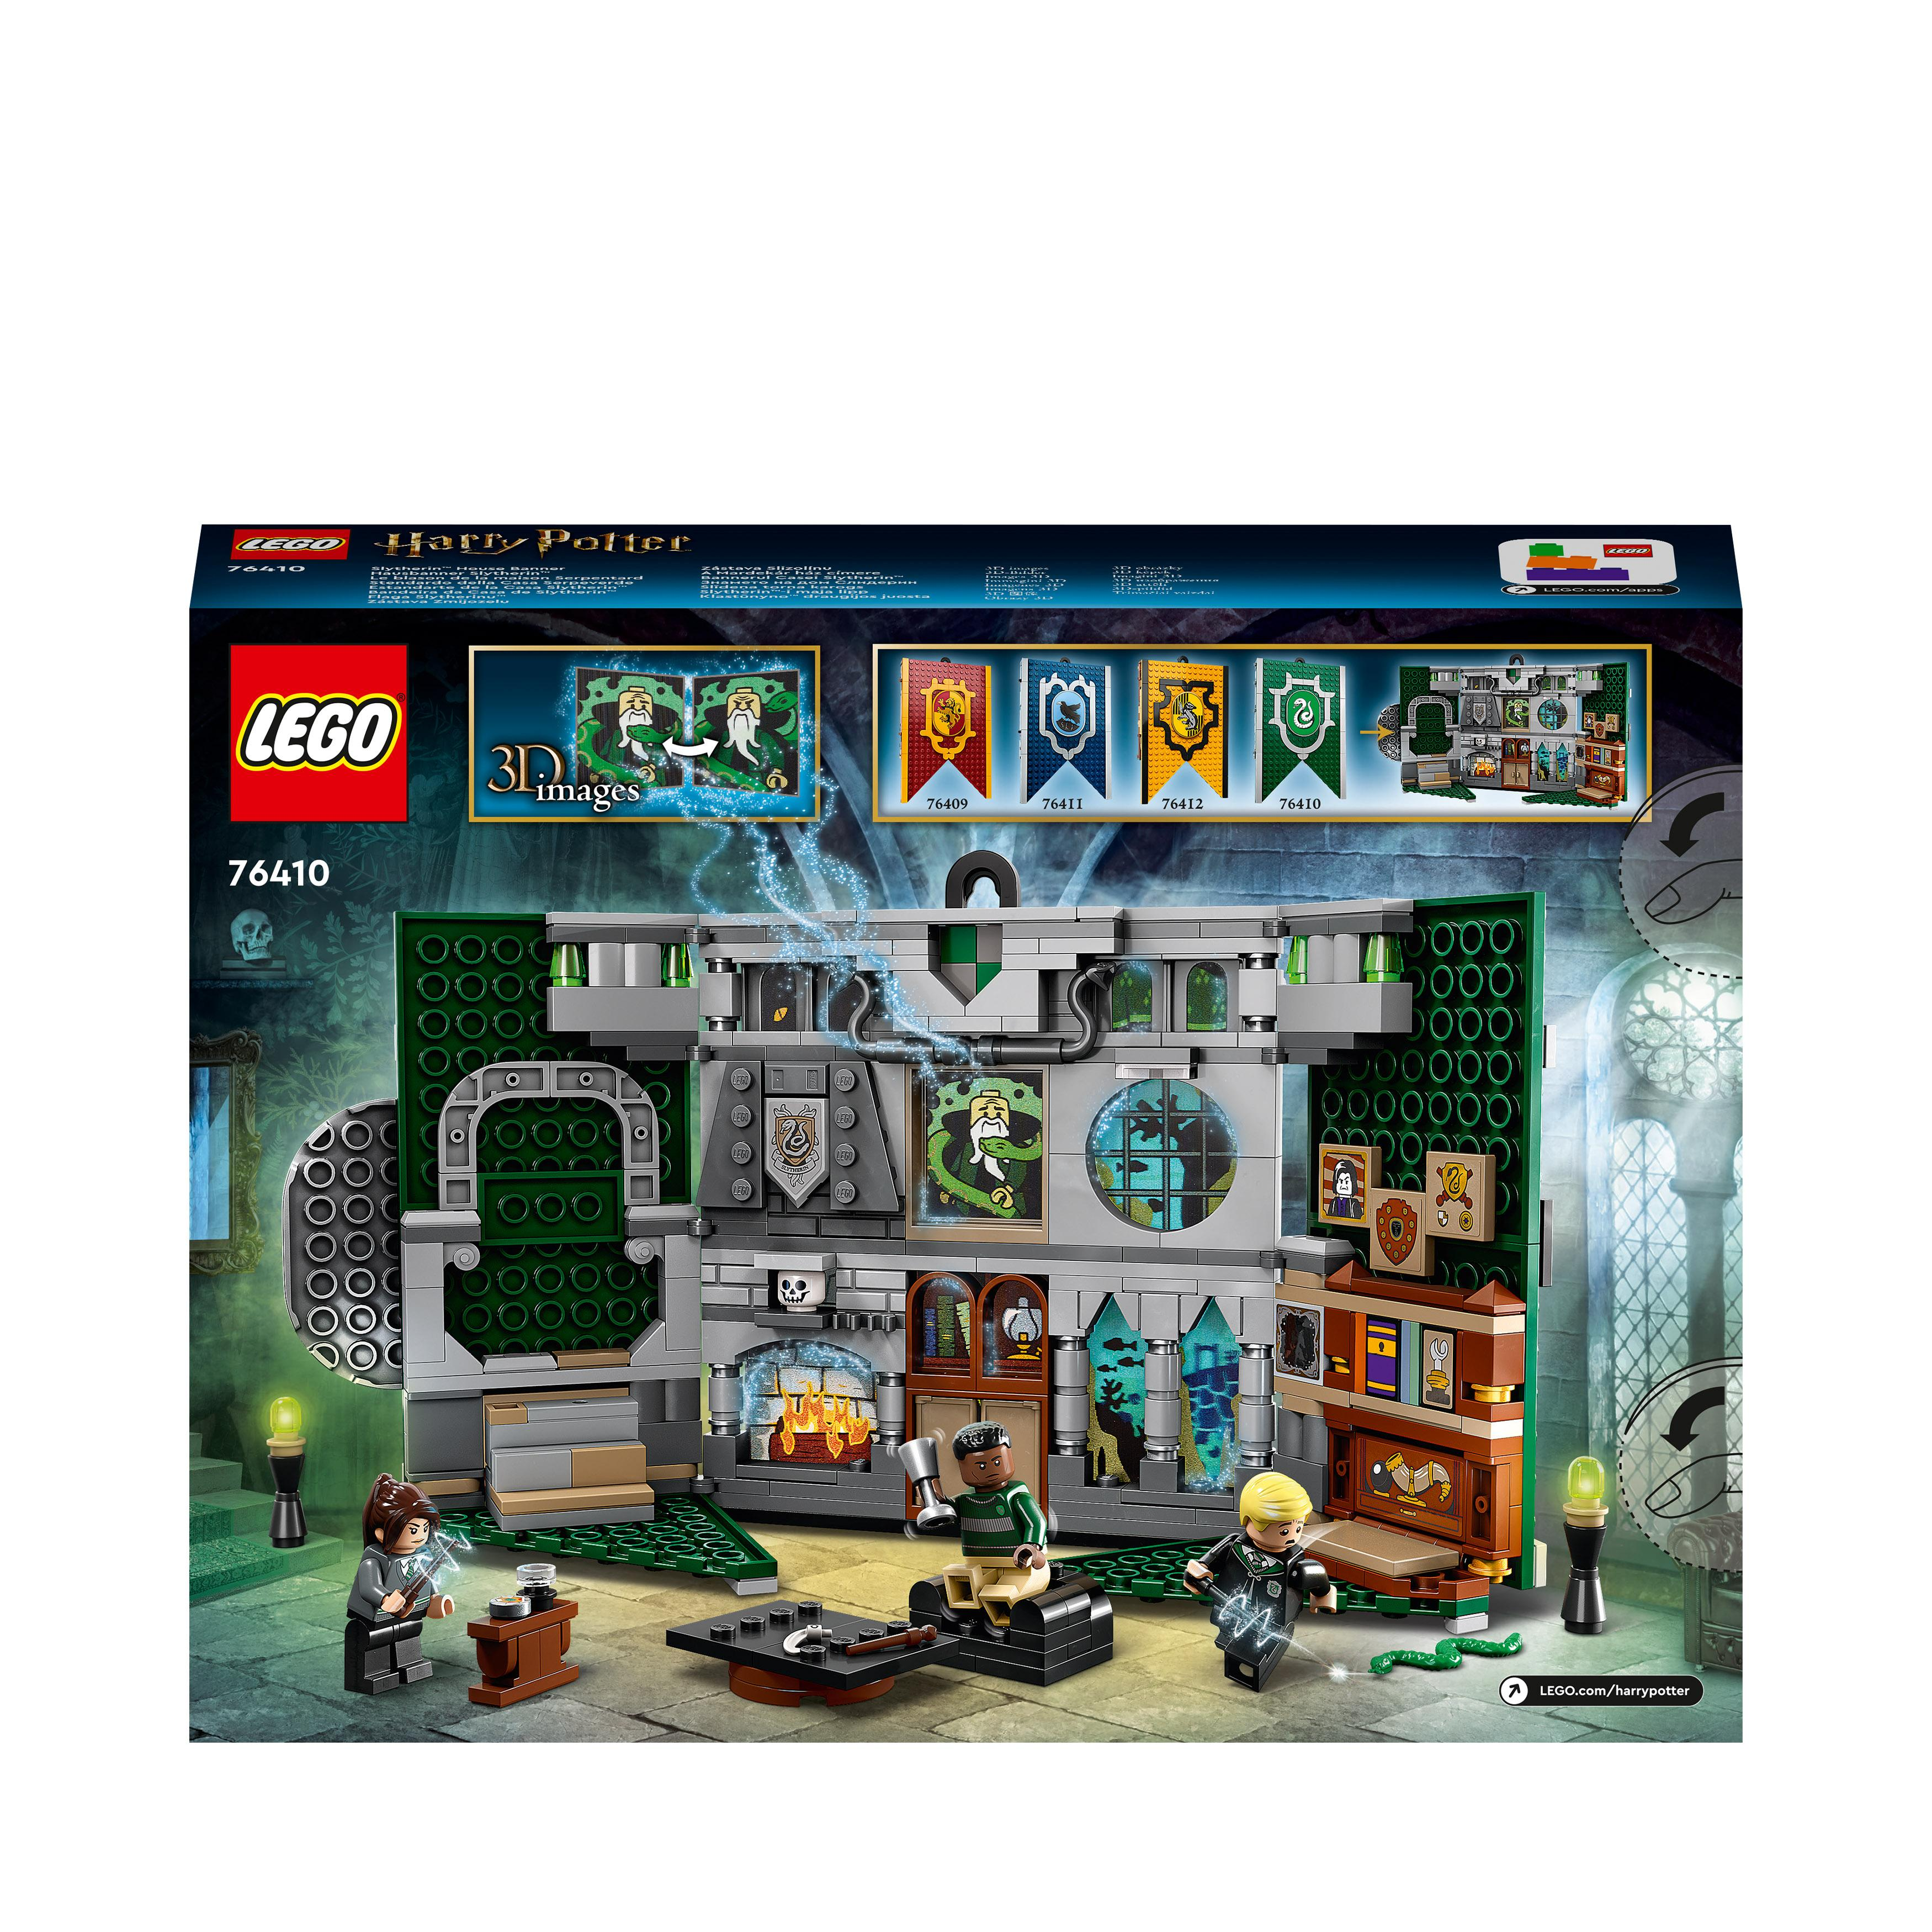 Slytherin Mehrfarbig 76410 Bausatz, Harry Potter LEGO Hausbanner